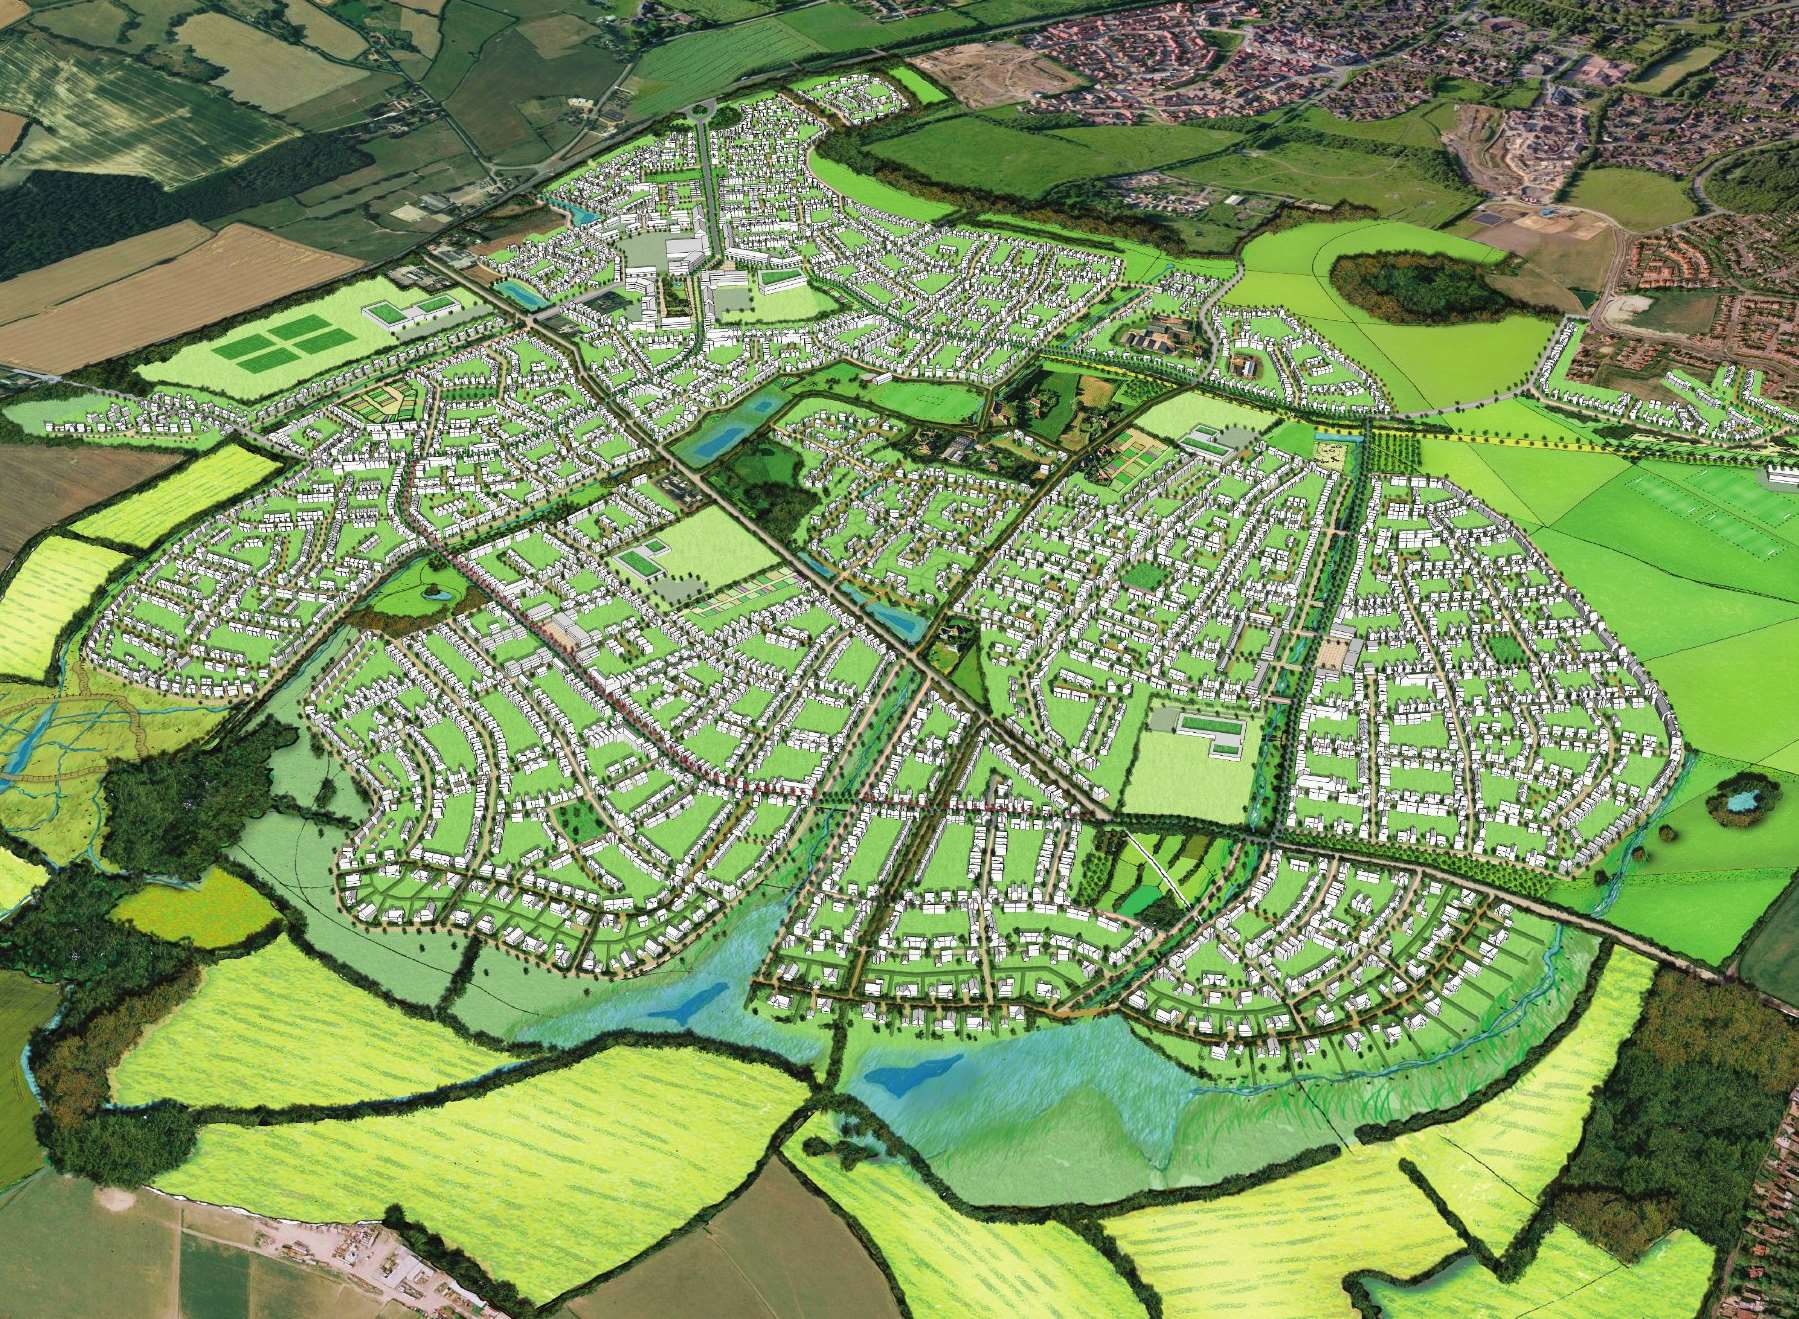 An artist's impression of the Chilmington Green development